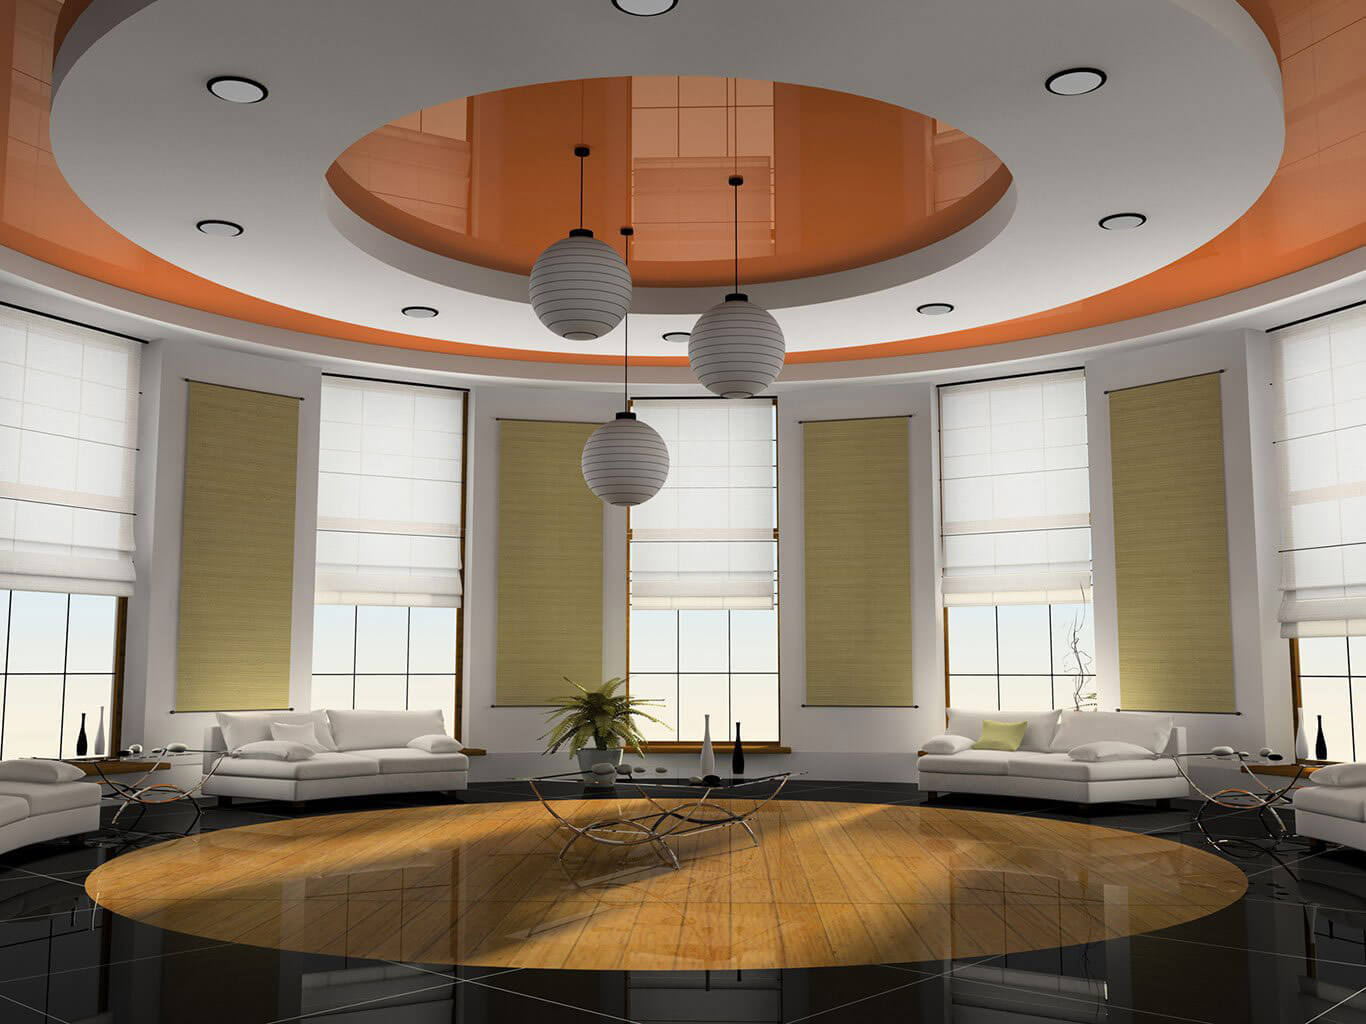 Modern POP False Ceiling Designs For Living Room - The ...